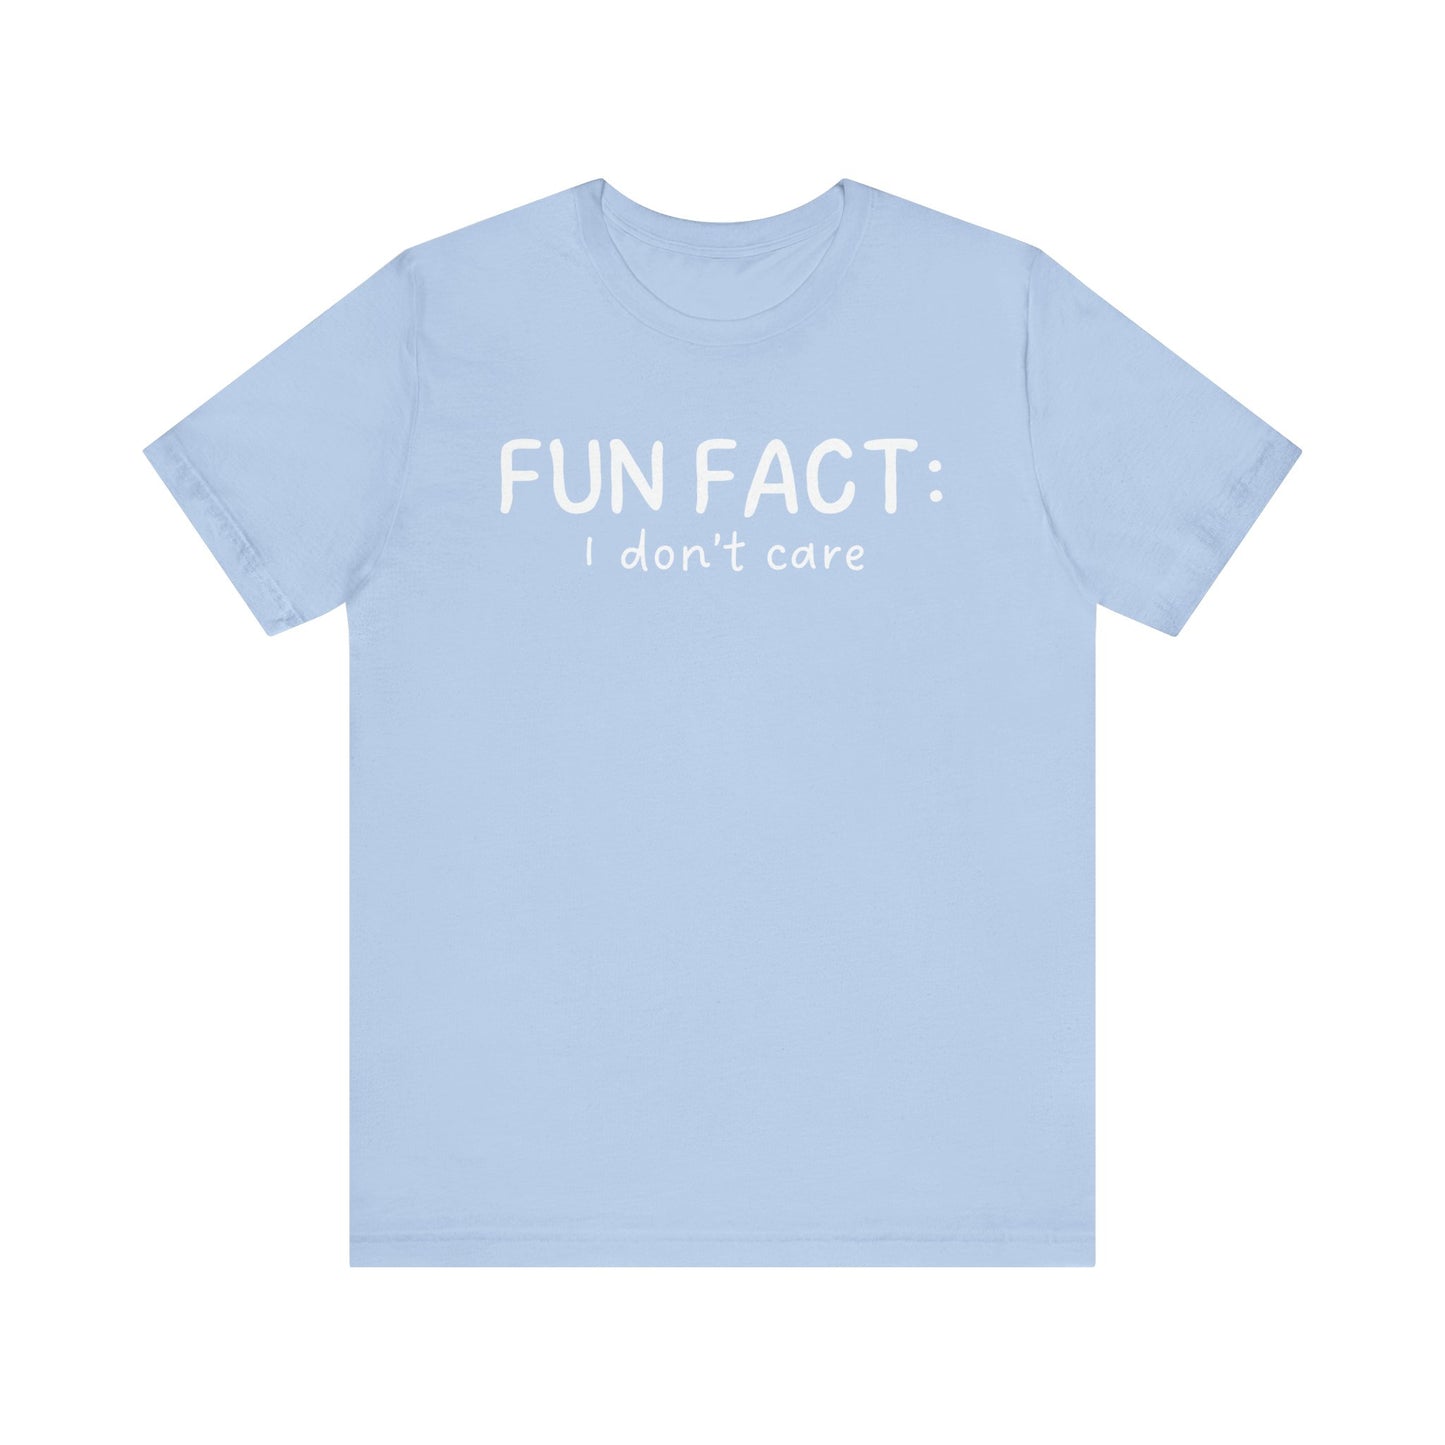 Fun Fact: I Don't Care - T-Shirt